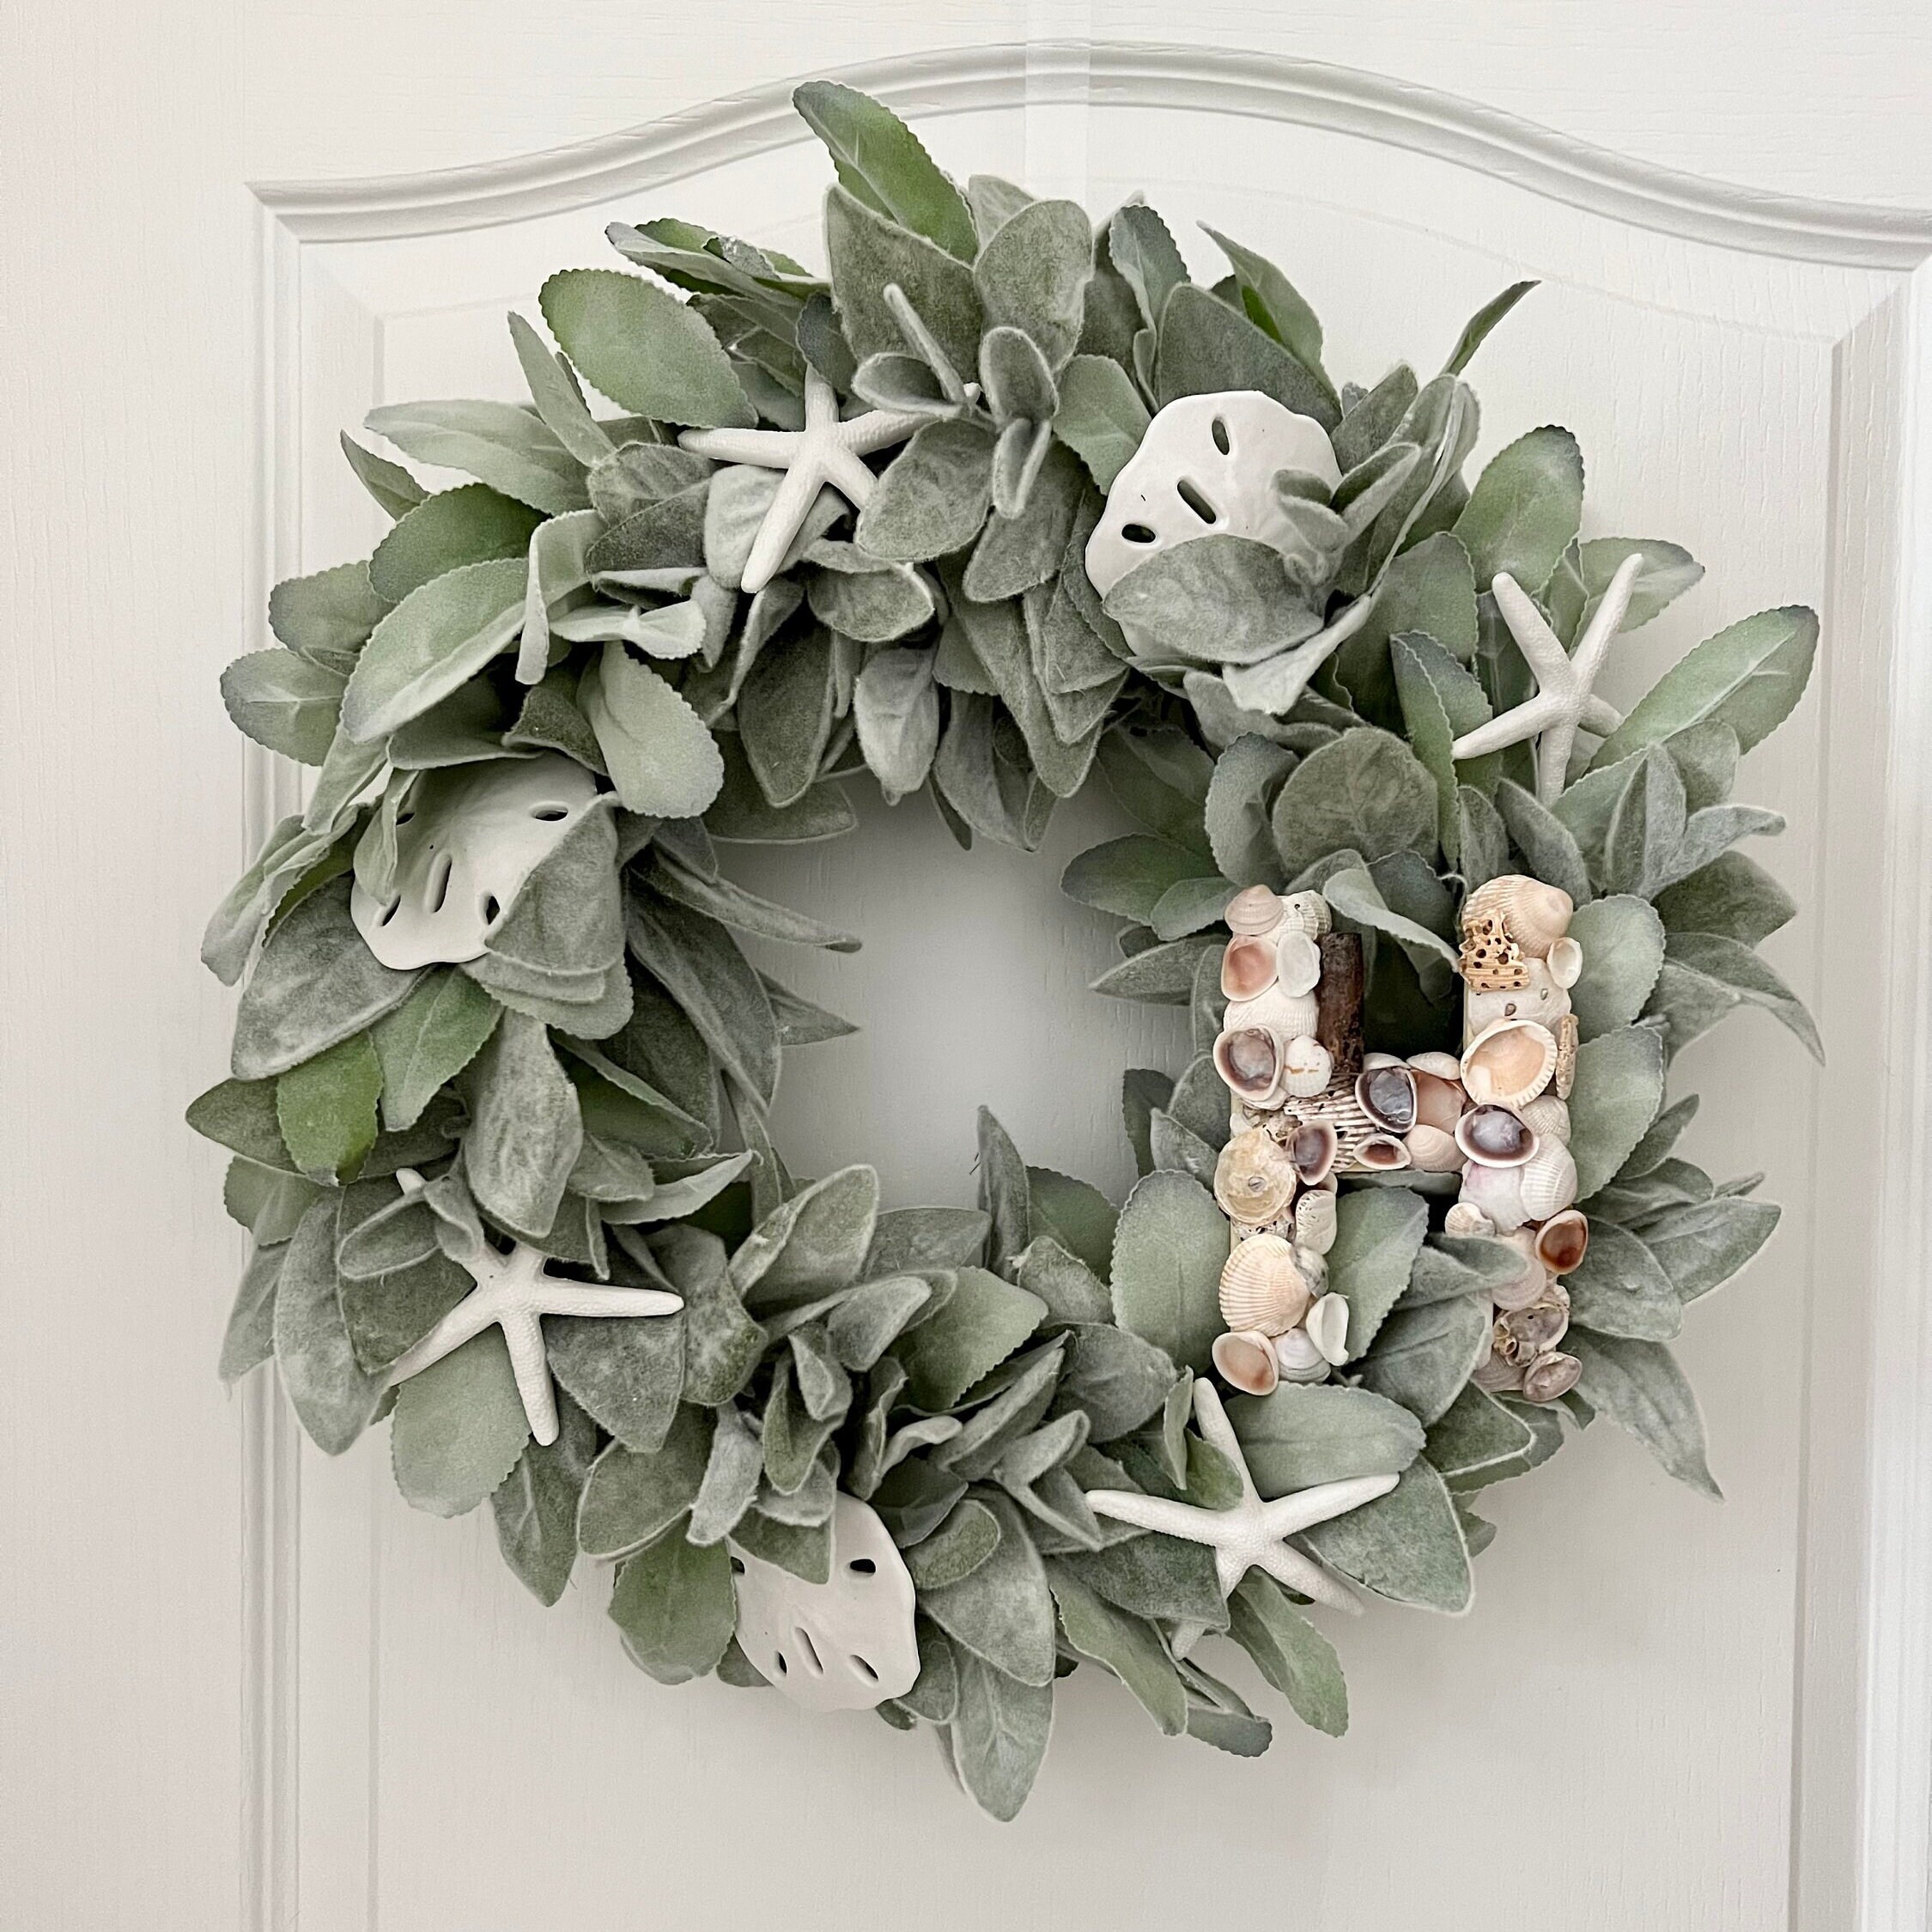 Small Frosted Eucalyptus Wreath, Small Greenery Wreath, Small Eucalyptus  Wreath, Year Round Wreath, Holiday Gift Ideas, Farmhouse Decor 